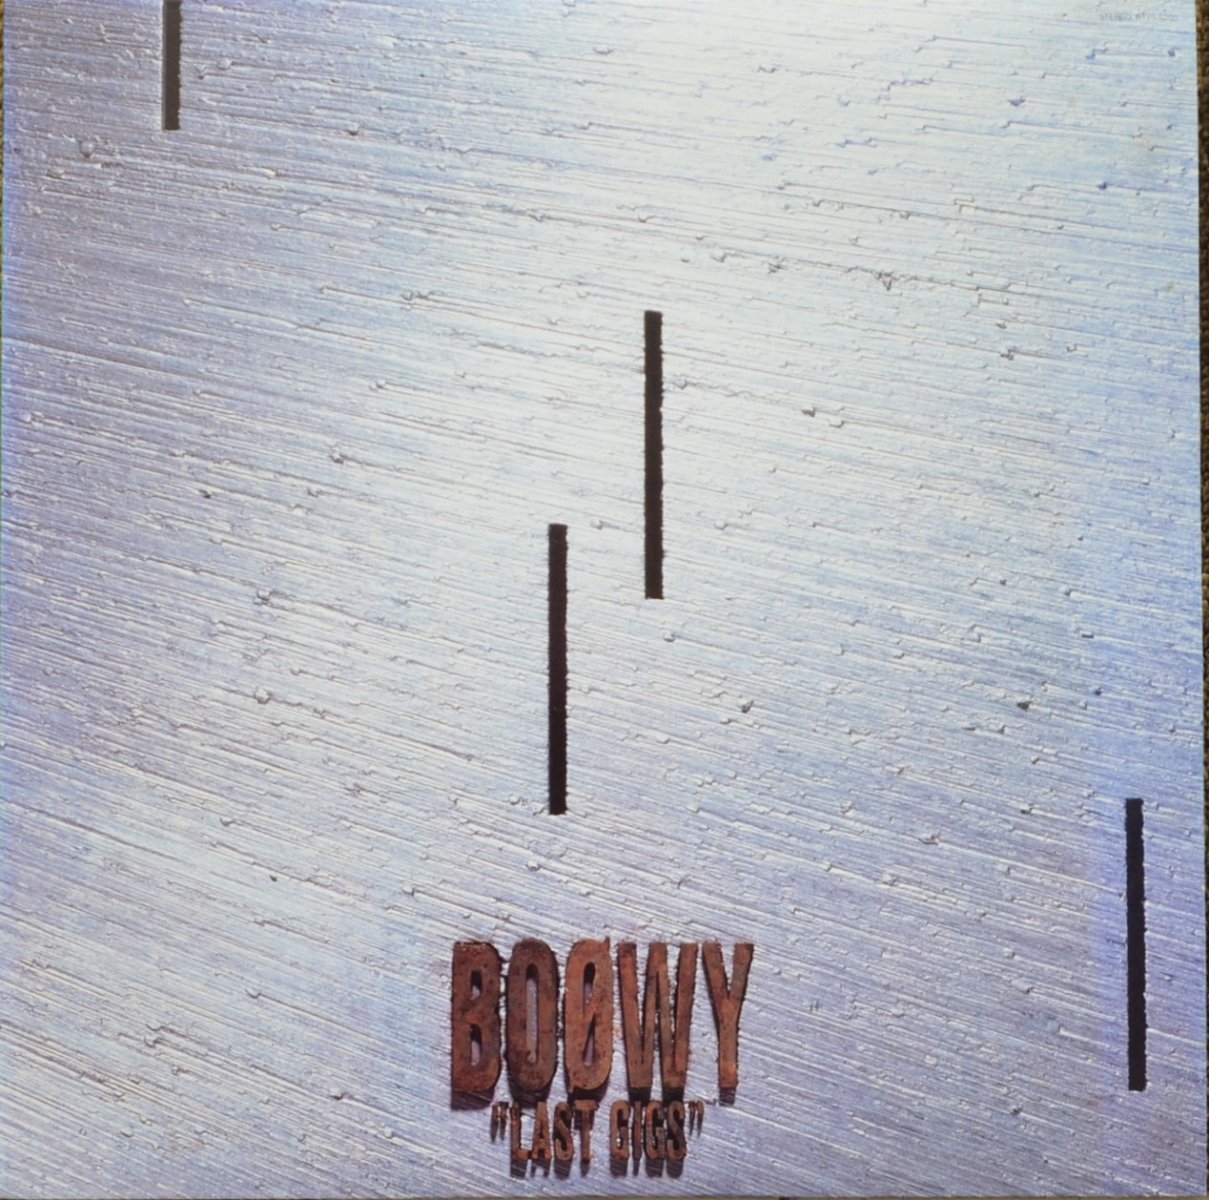 BOØWY / LAST GIGS (1LP) - HIP TANK RECORDS